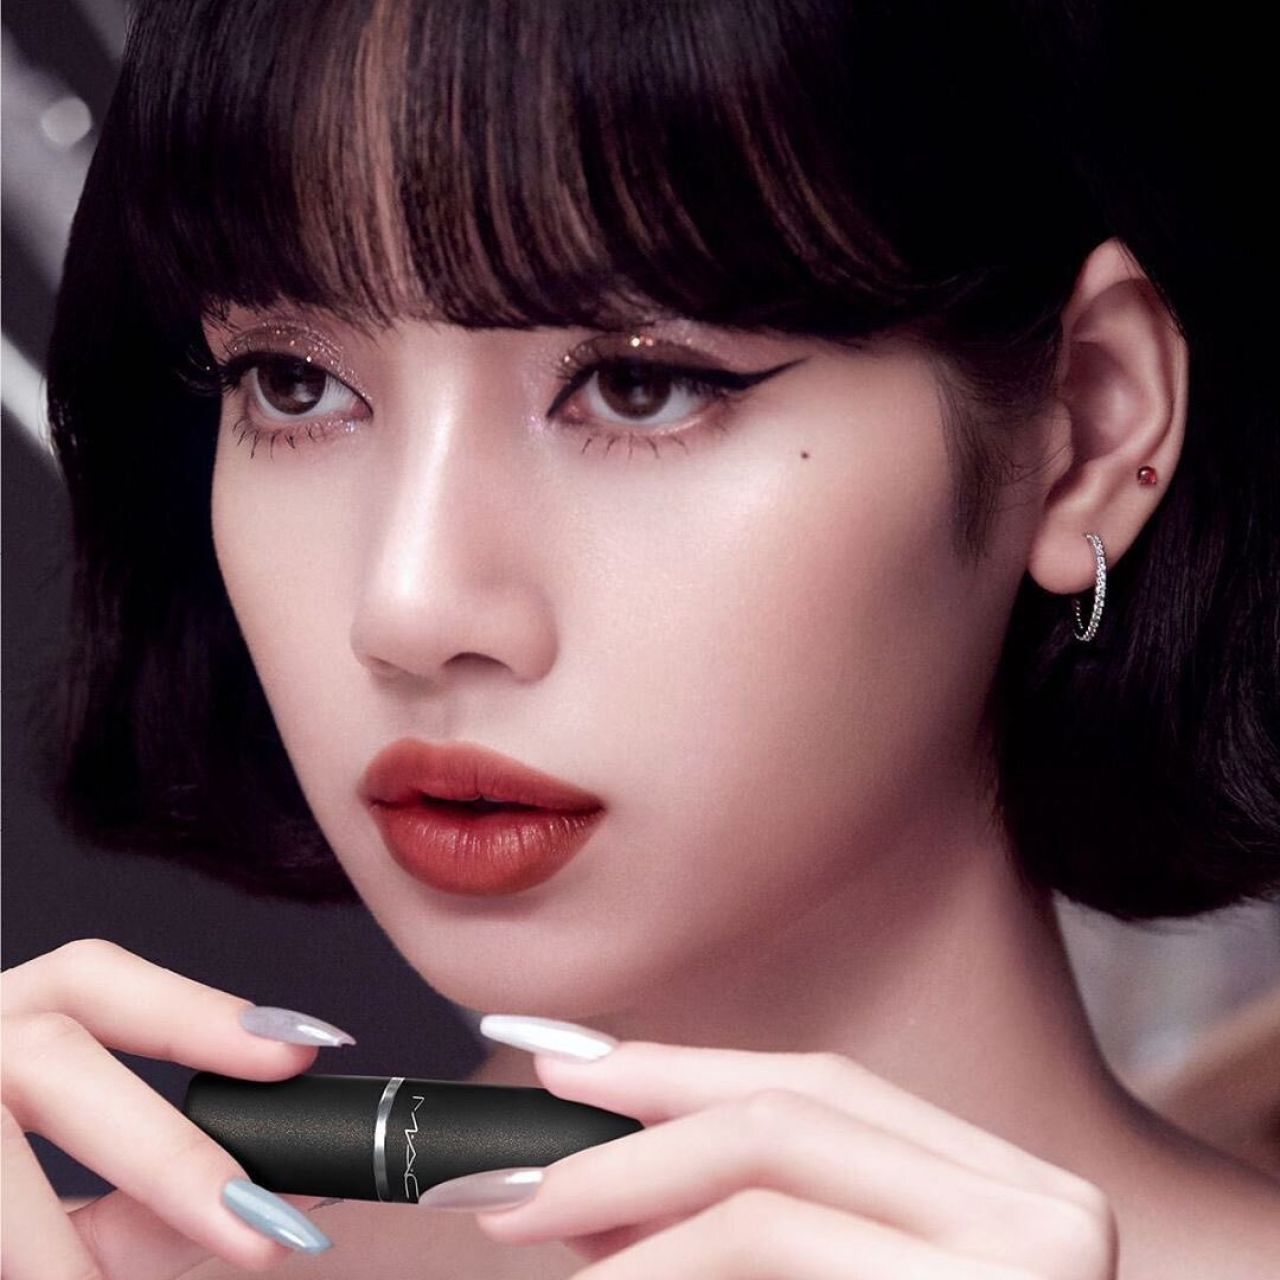 Blackpink S Lisa Joins Mac Cosmetics As Brand Ambassa - vrogue.co